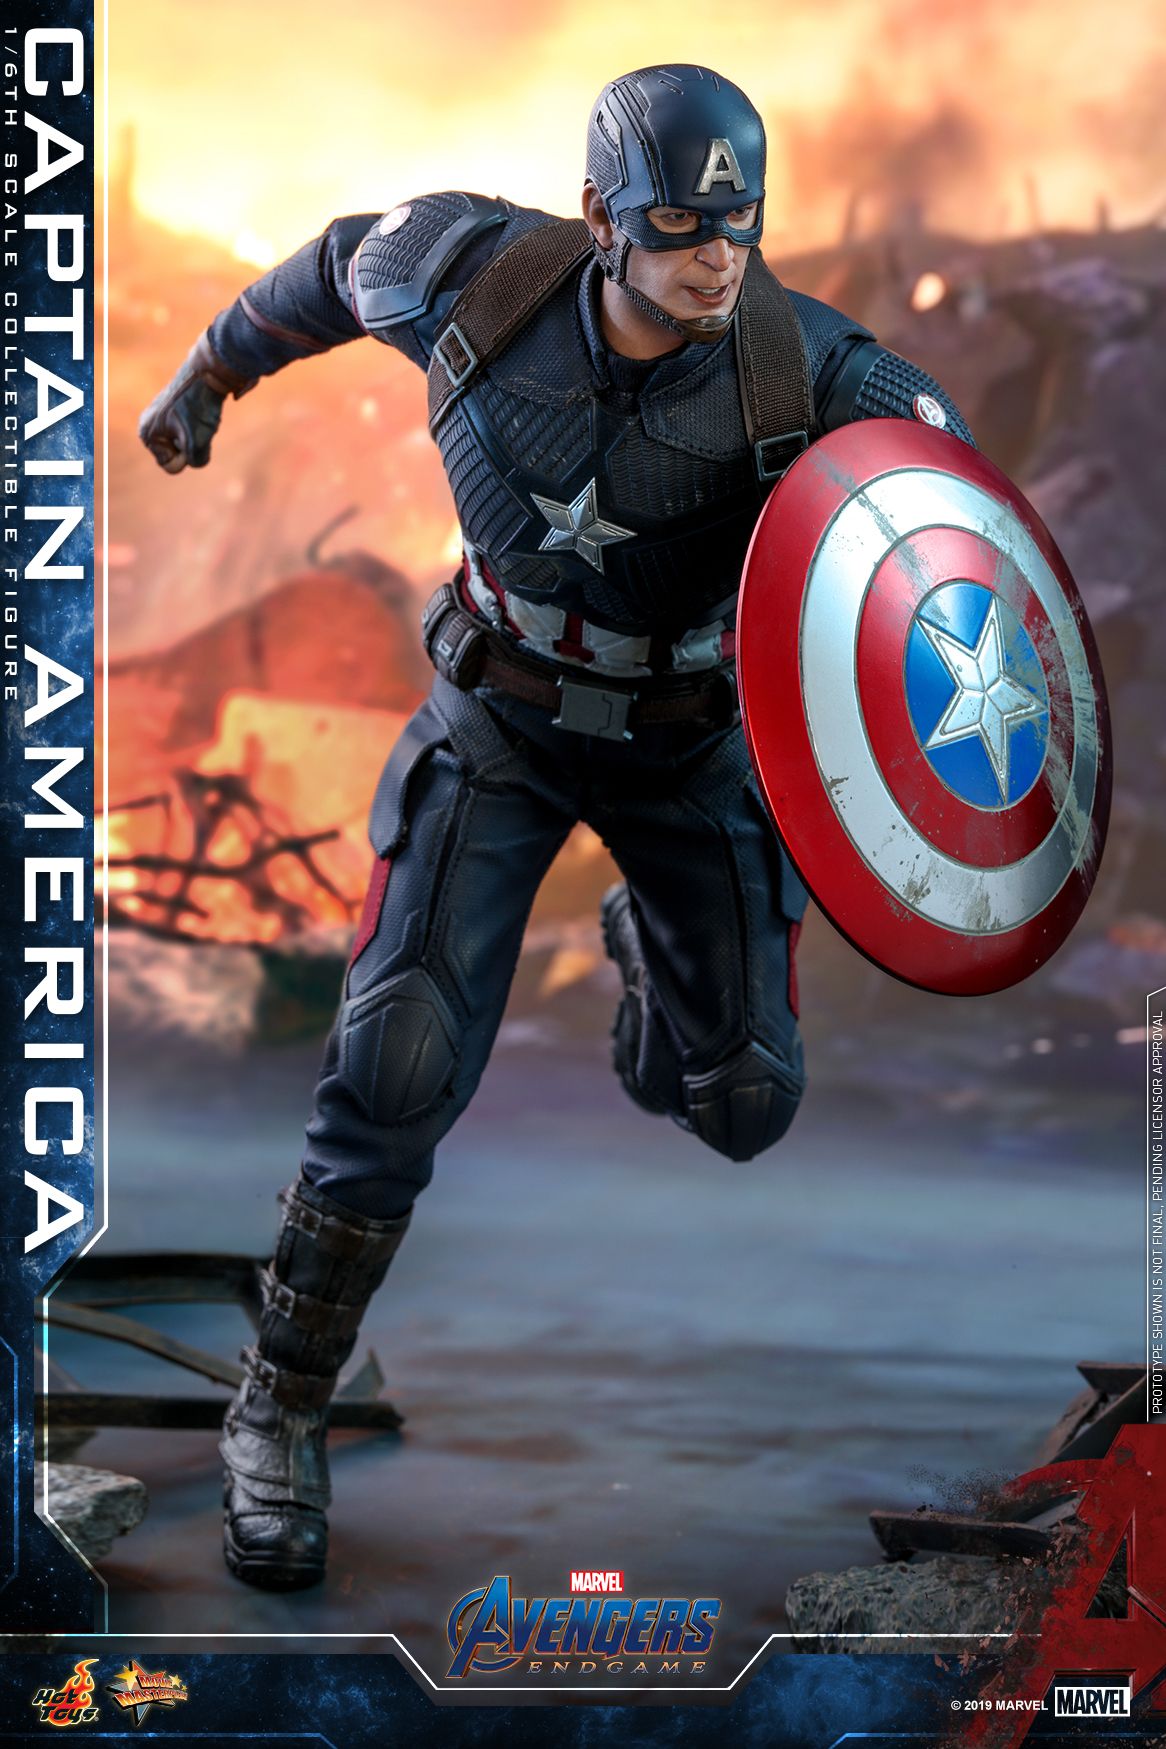 Hot Toys Avengers 4 Captain America Collectible Figure_pr8